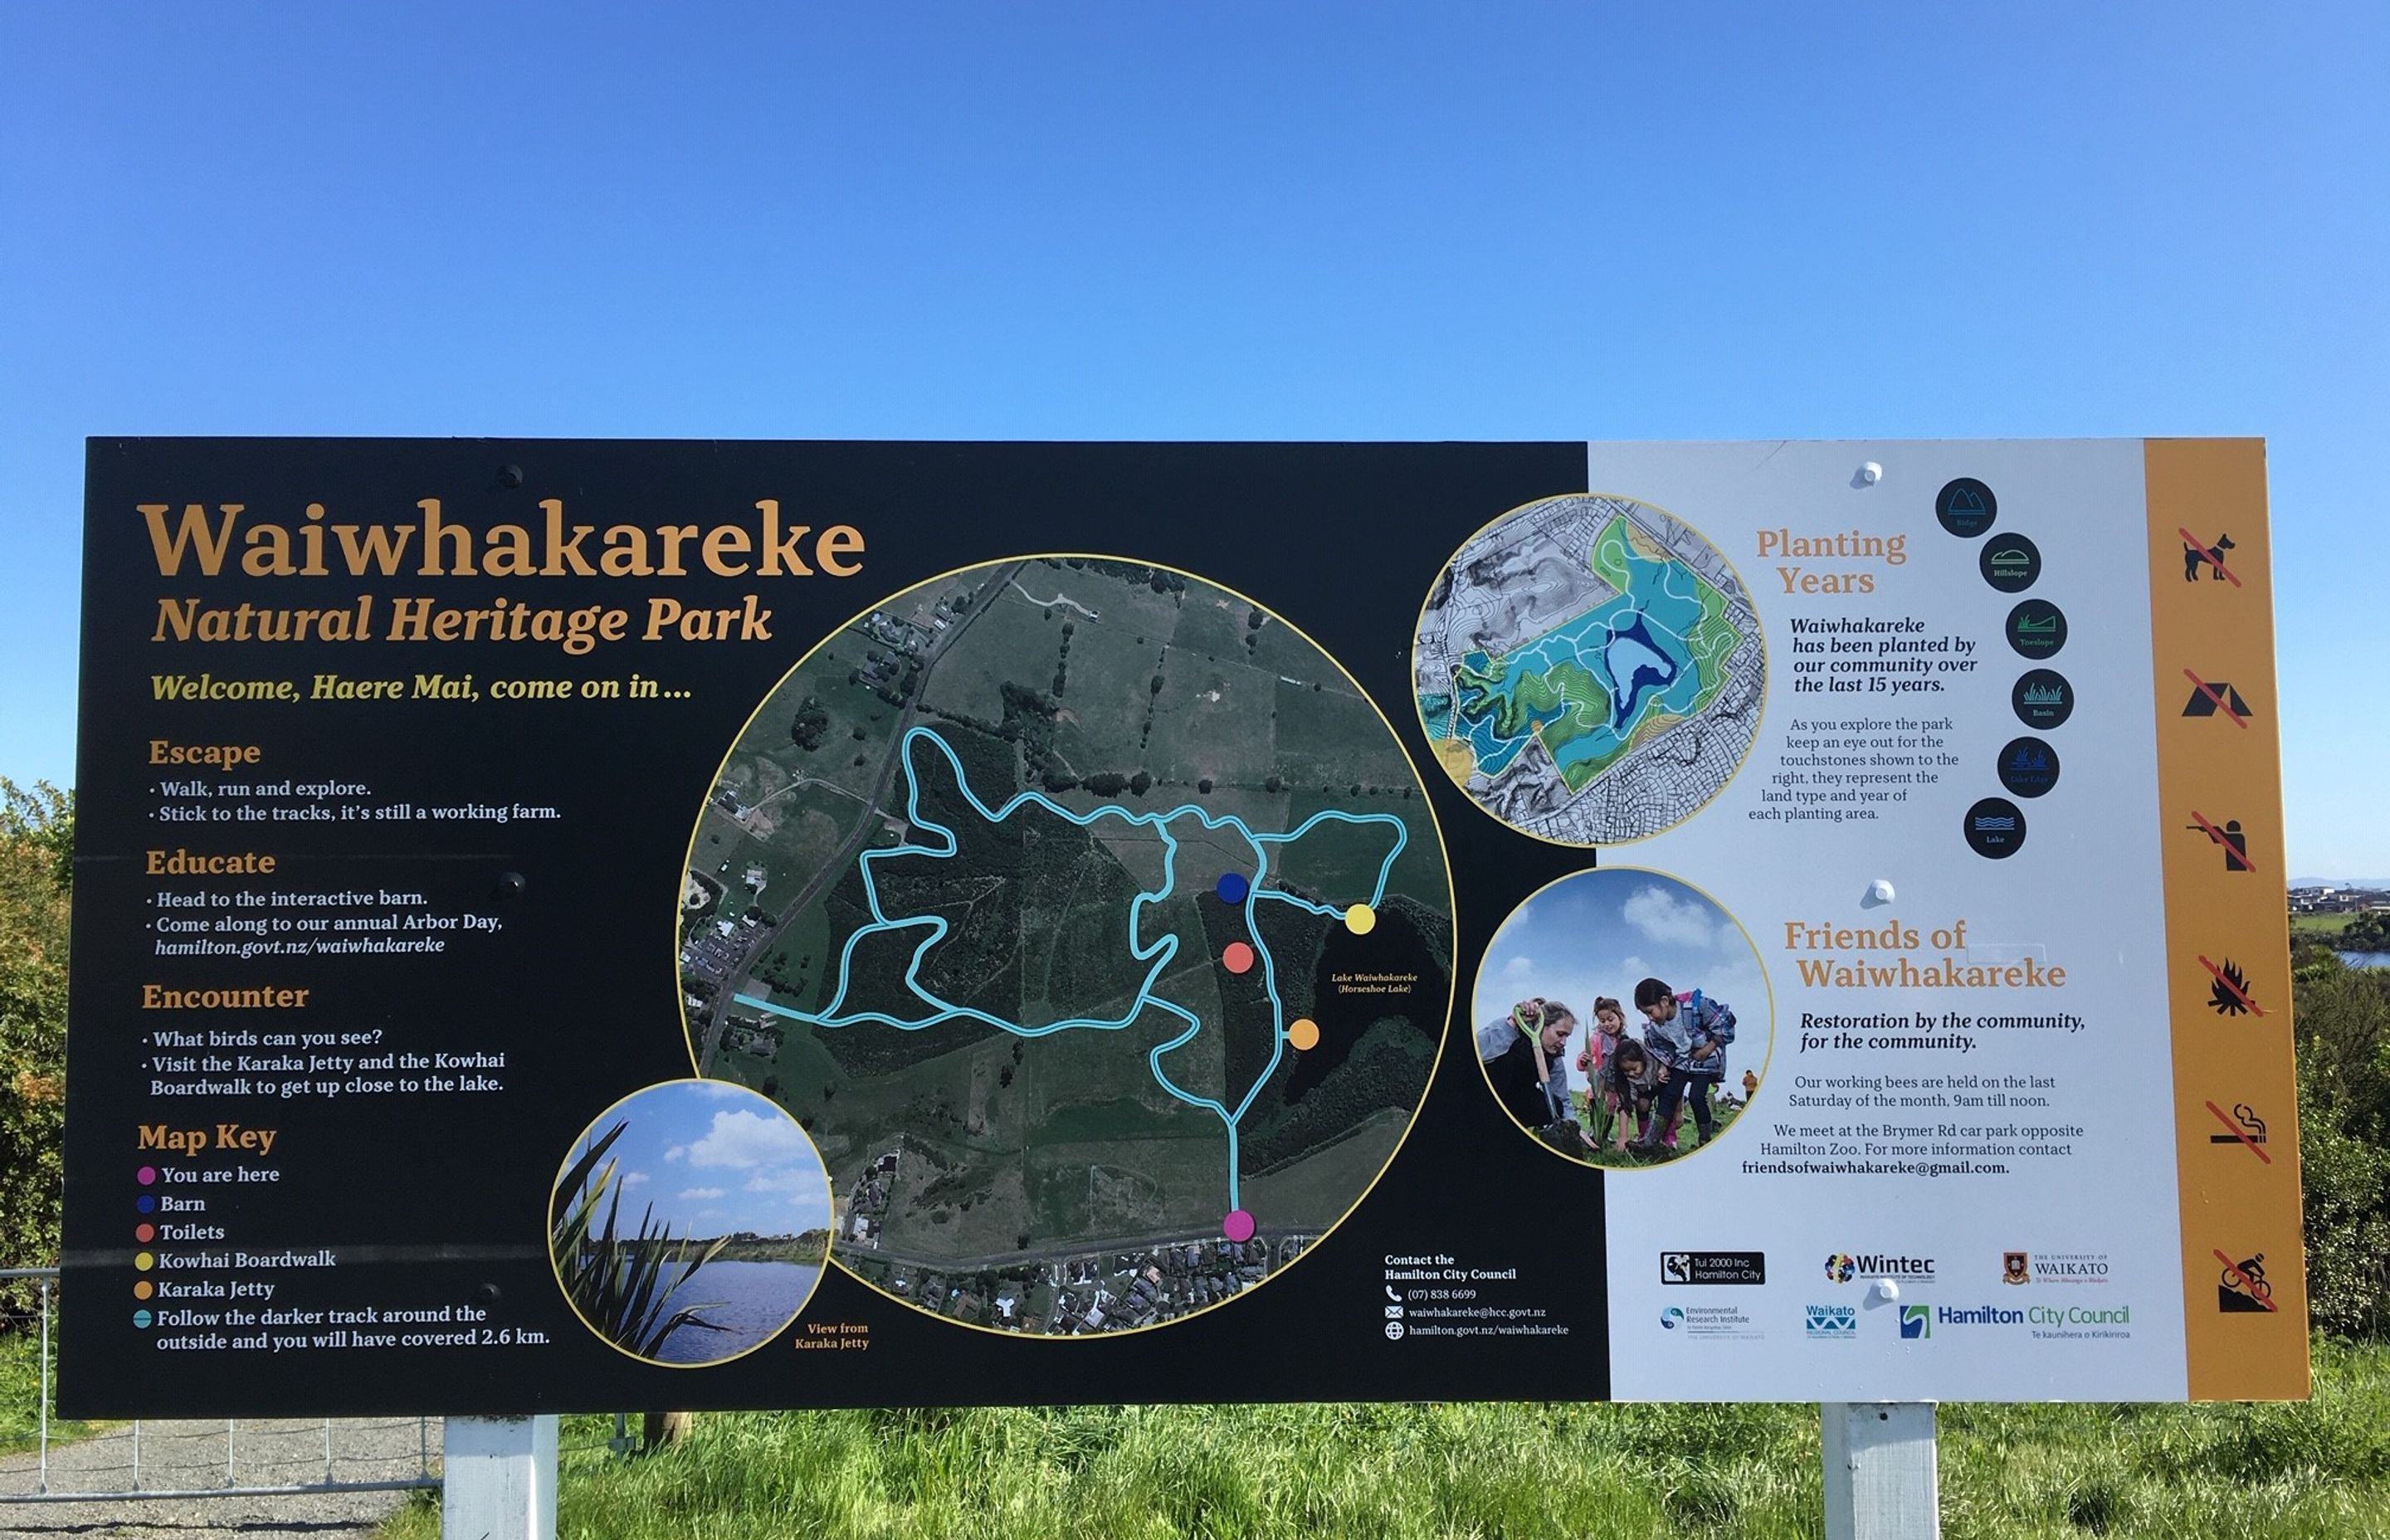 Waiwhakareke Natural Heritage Park